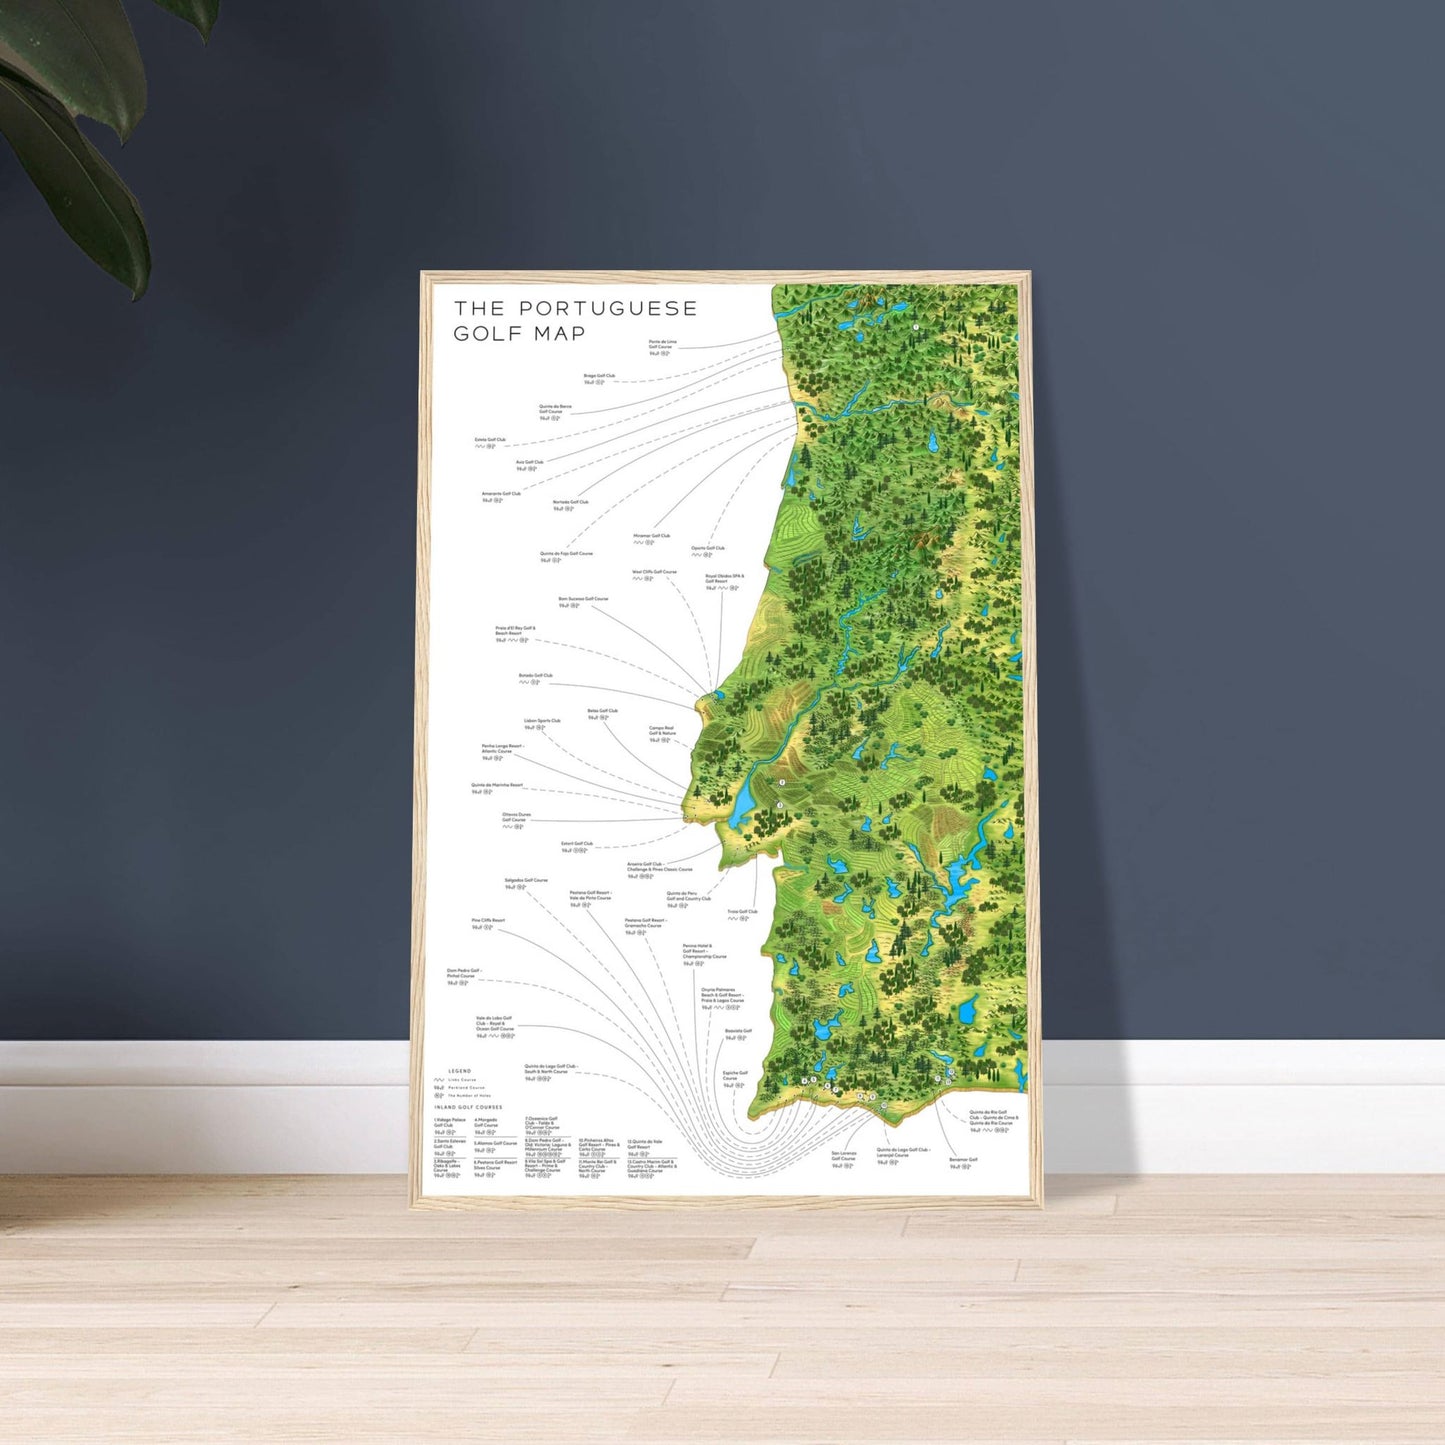 The Portuguese Golf Map